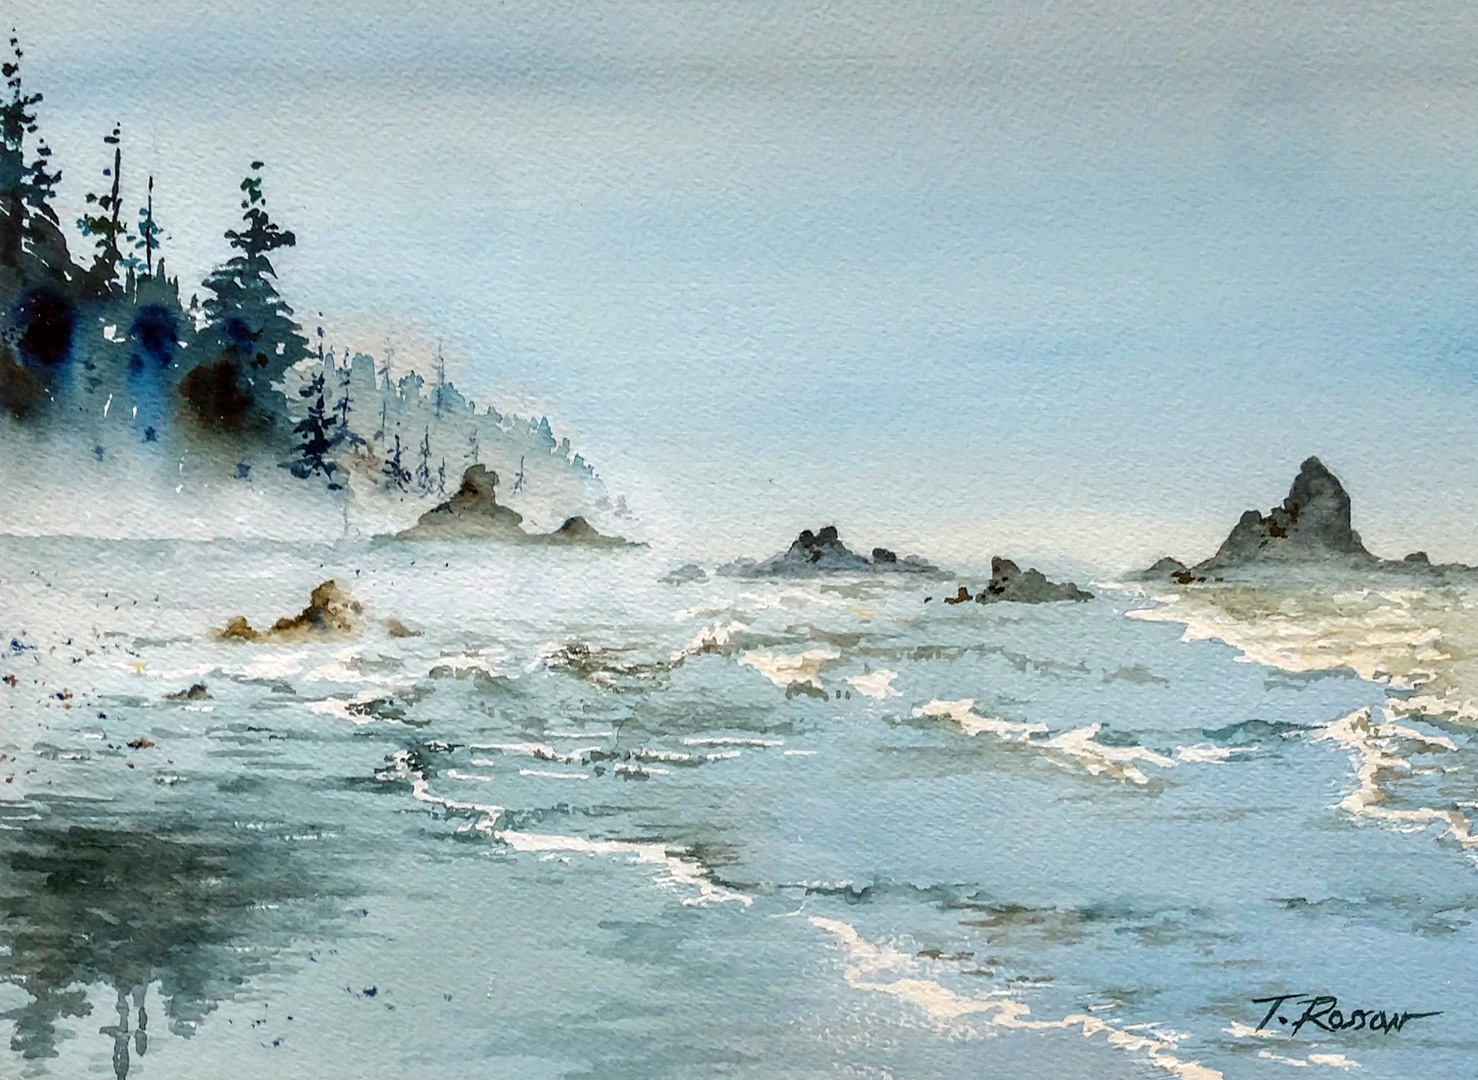 Sea Stacks, Pacific Ocean, WA, Watercolor on paper, 11.5 x 8.5